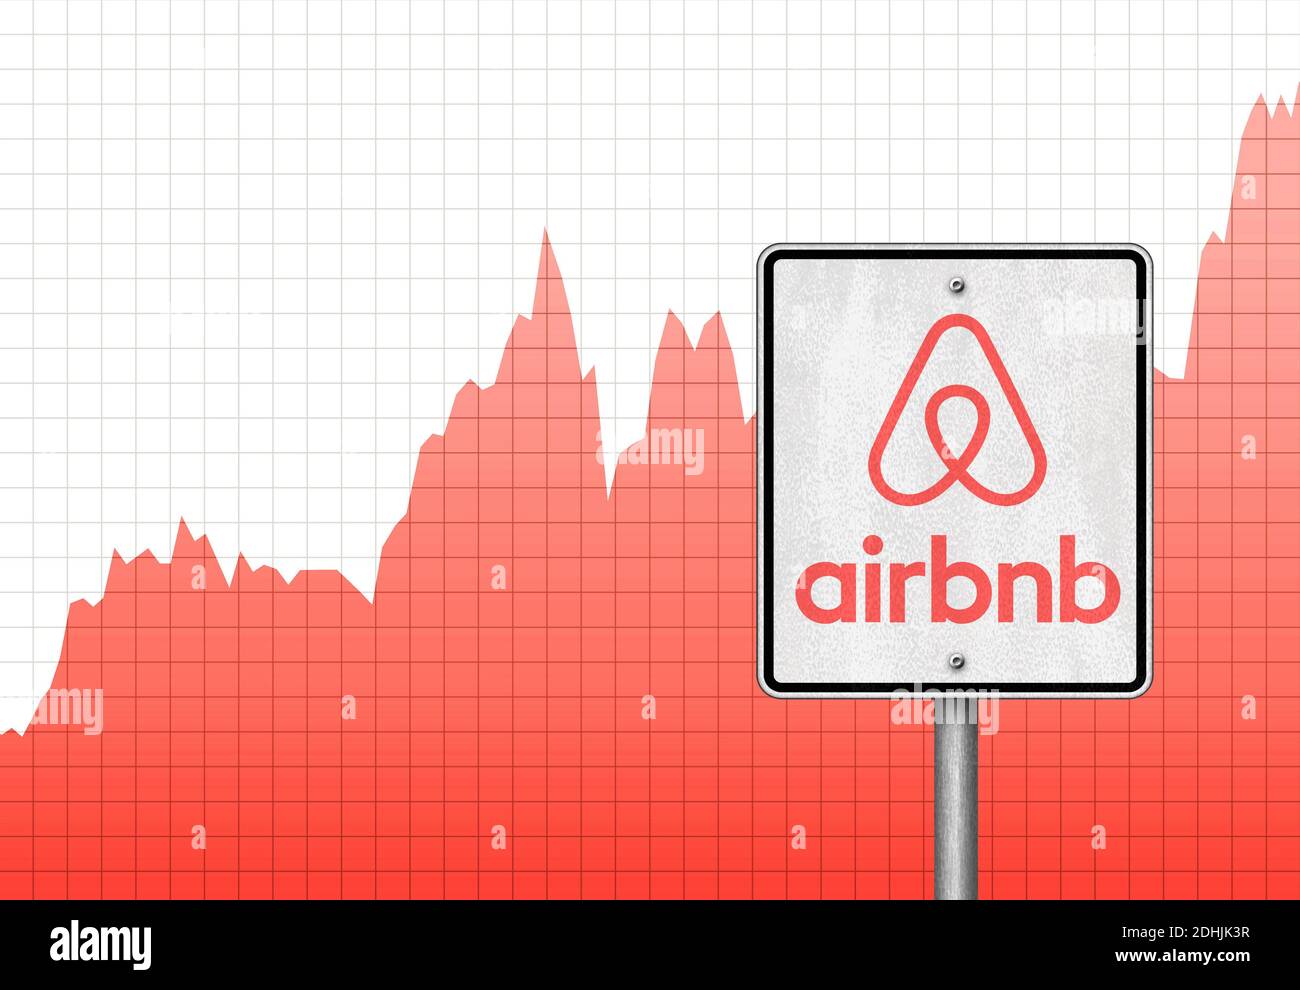 Airbnb stock chart Stock Photo